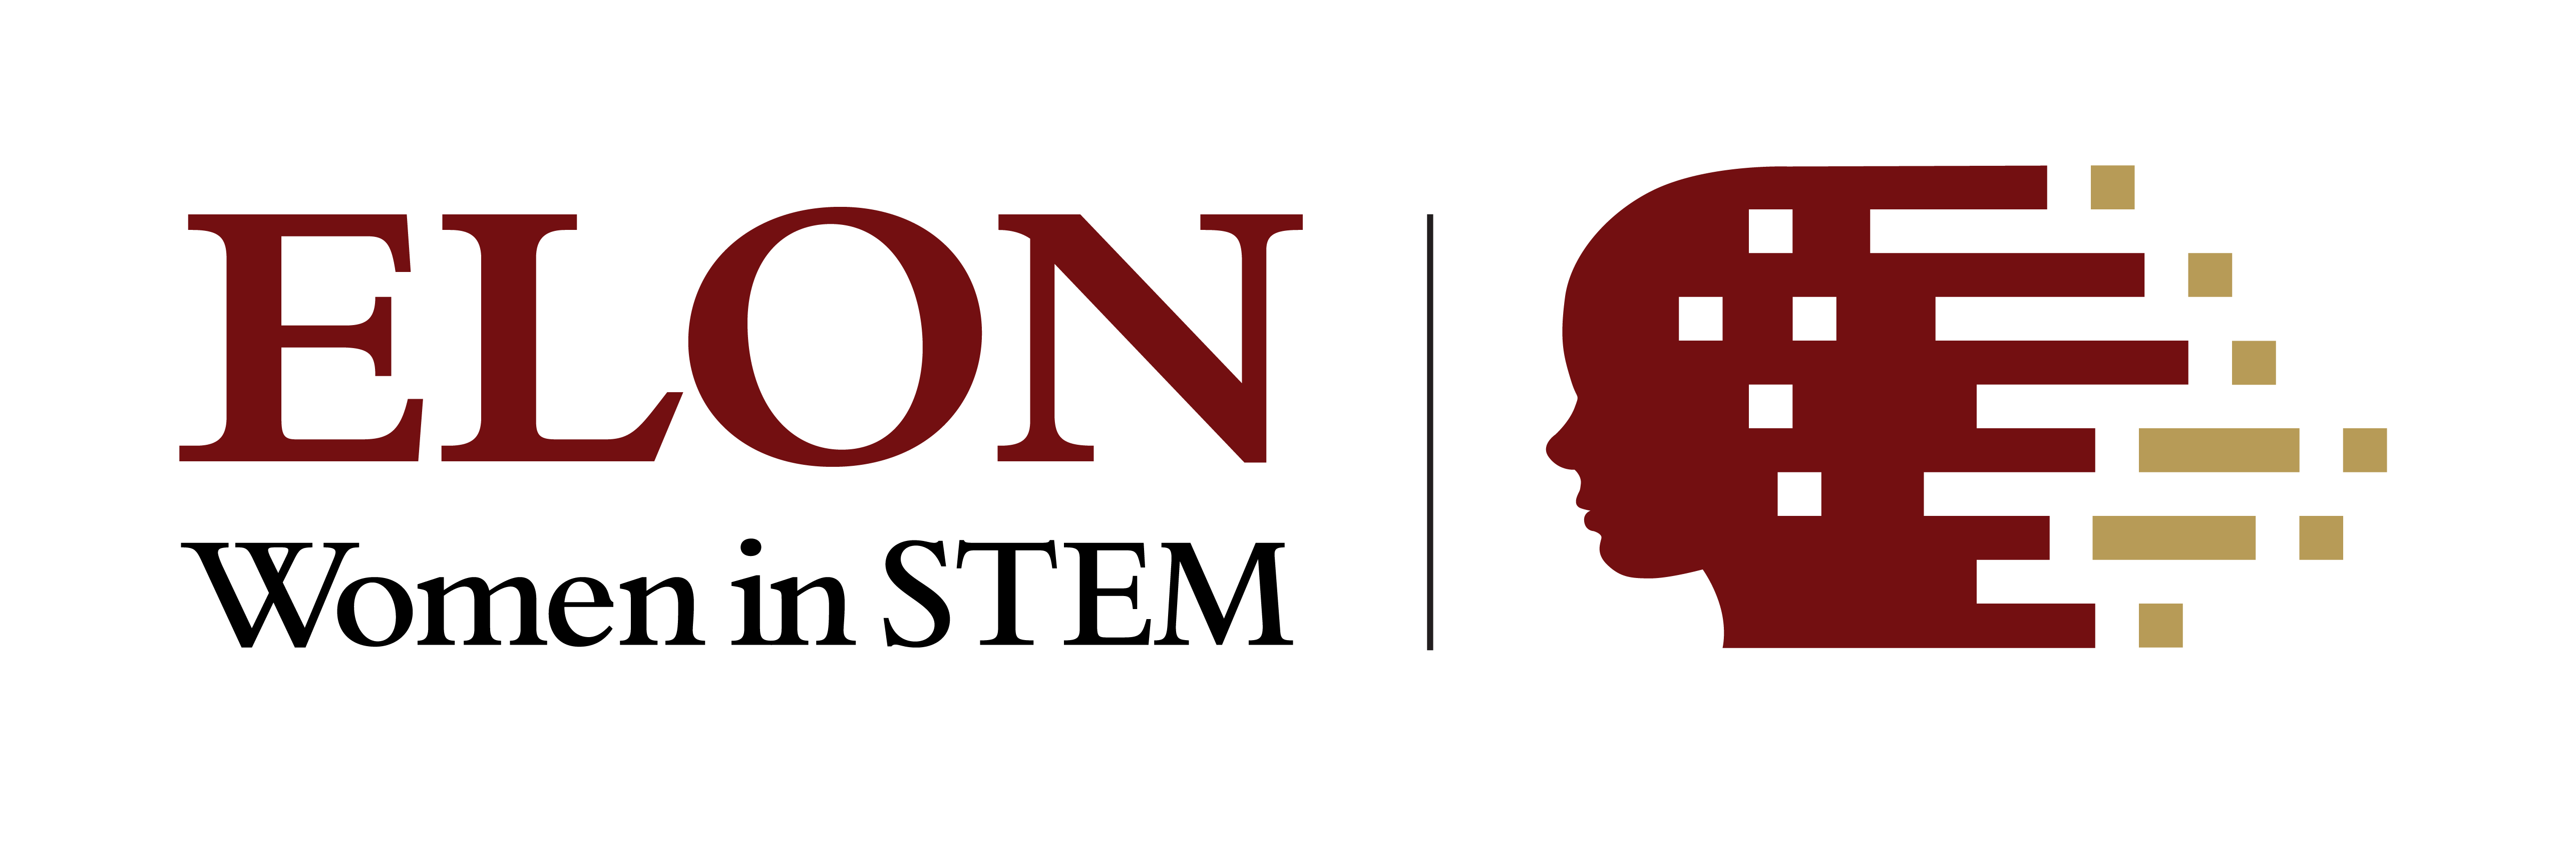 Elon Women in STEM logo in maroon and gold